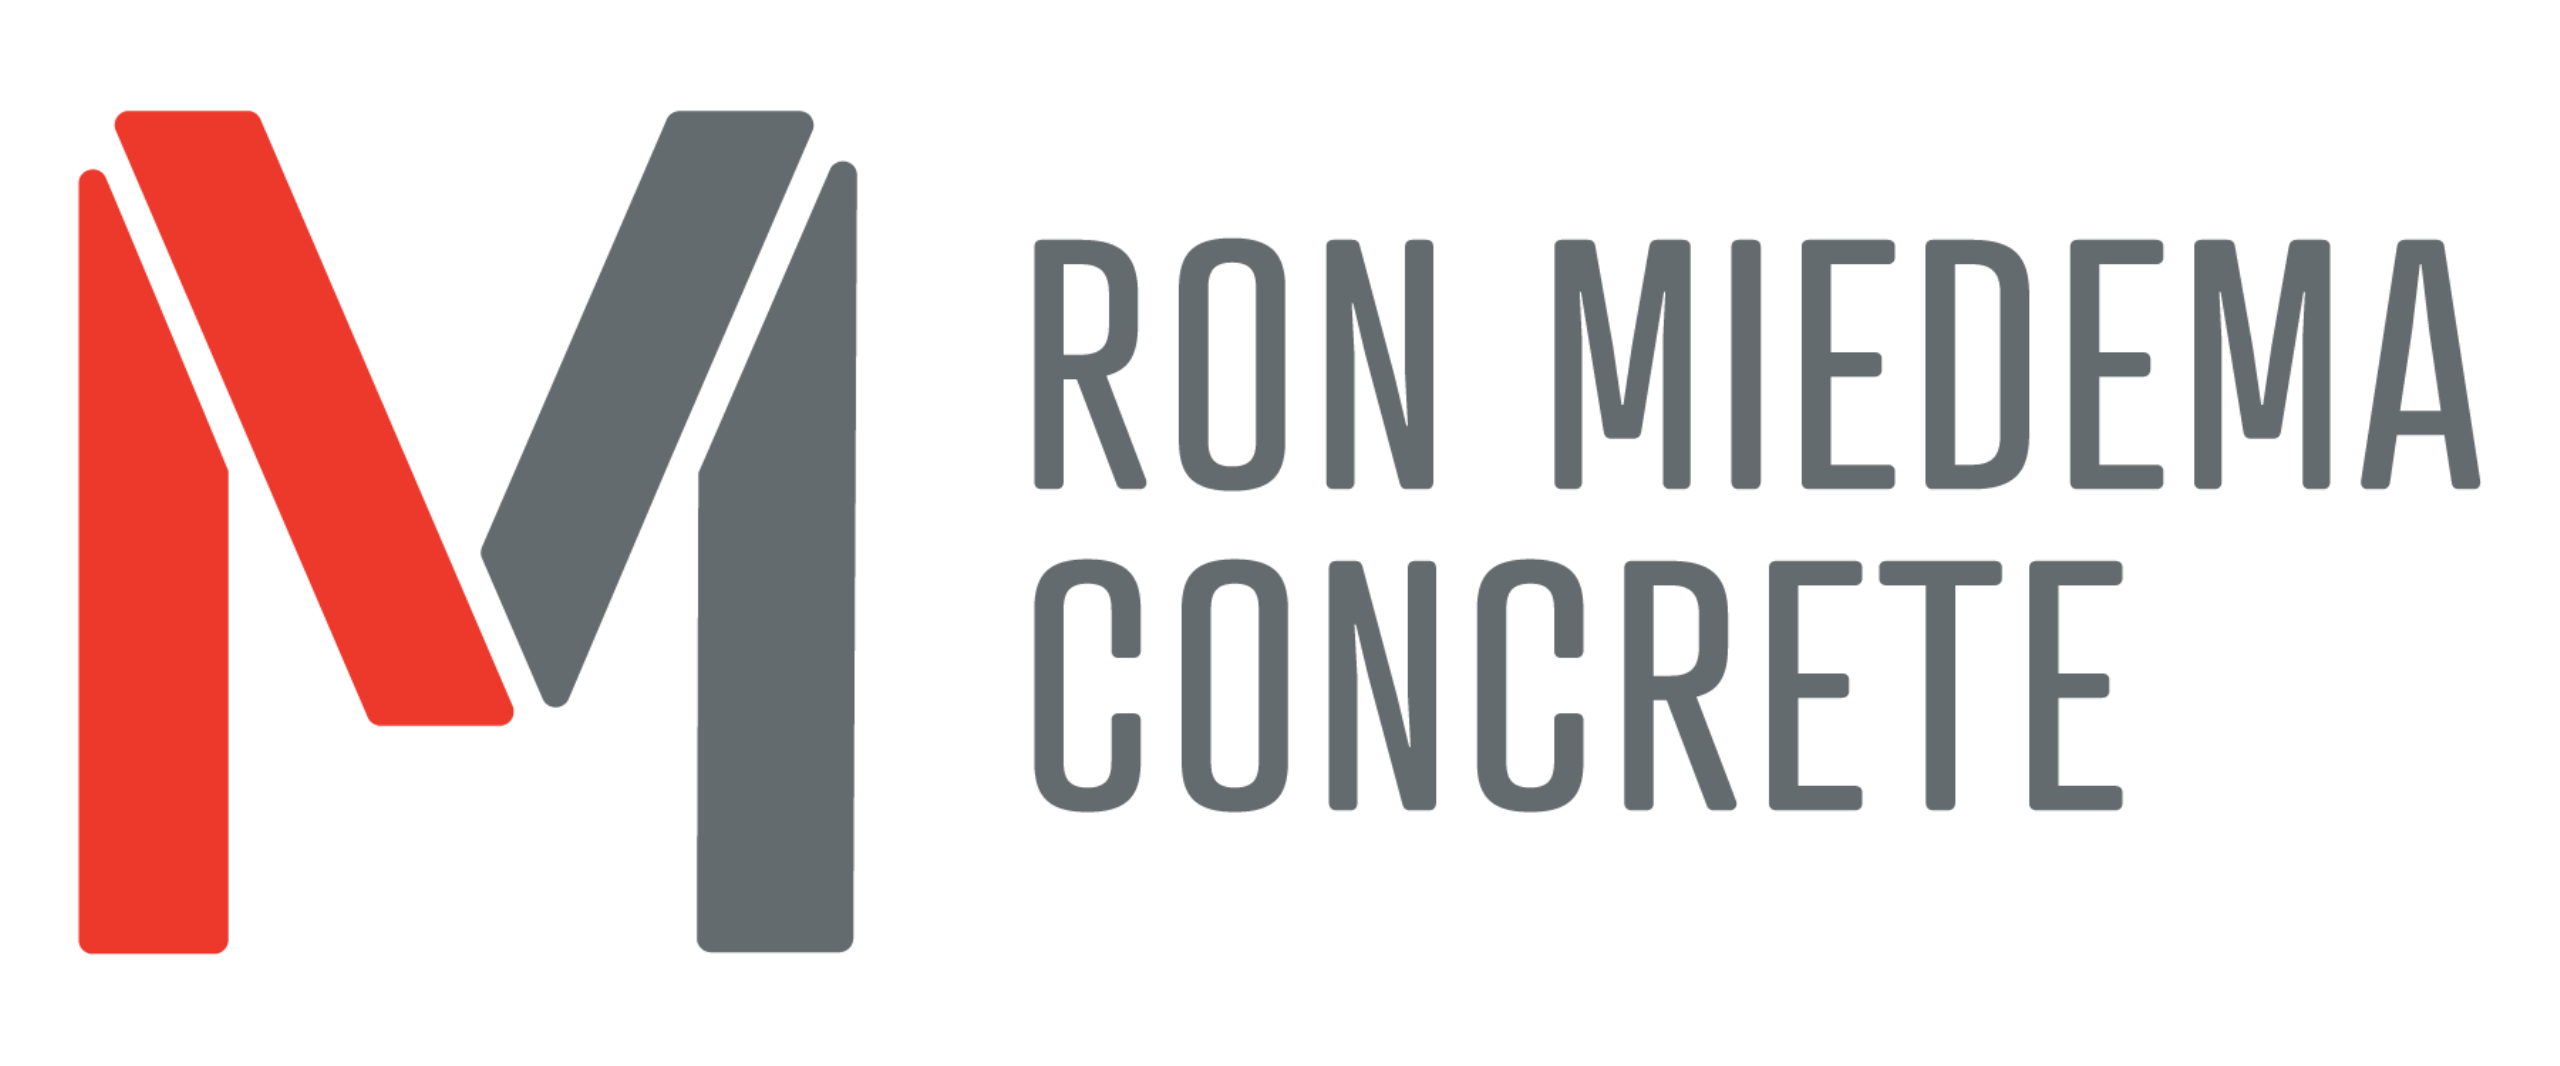 Ron Miedema Concrete Contractors, Inc. Logo